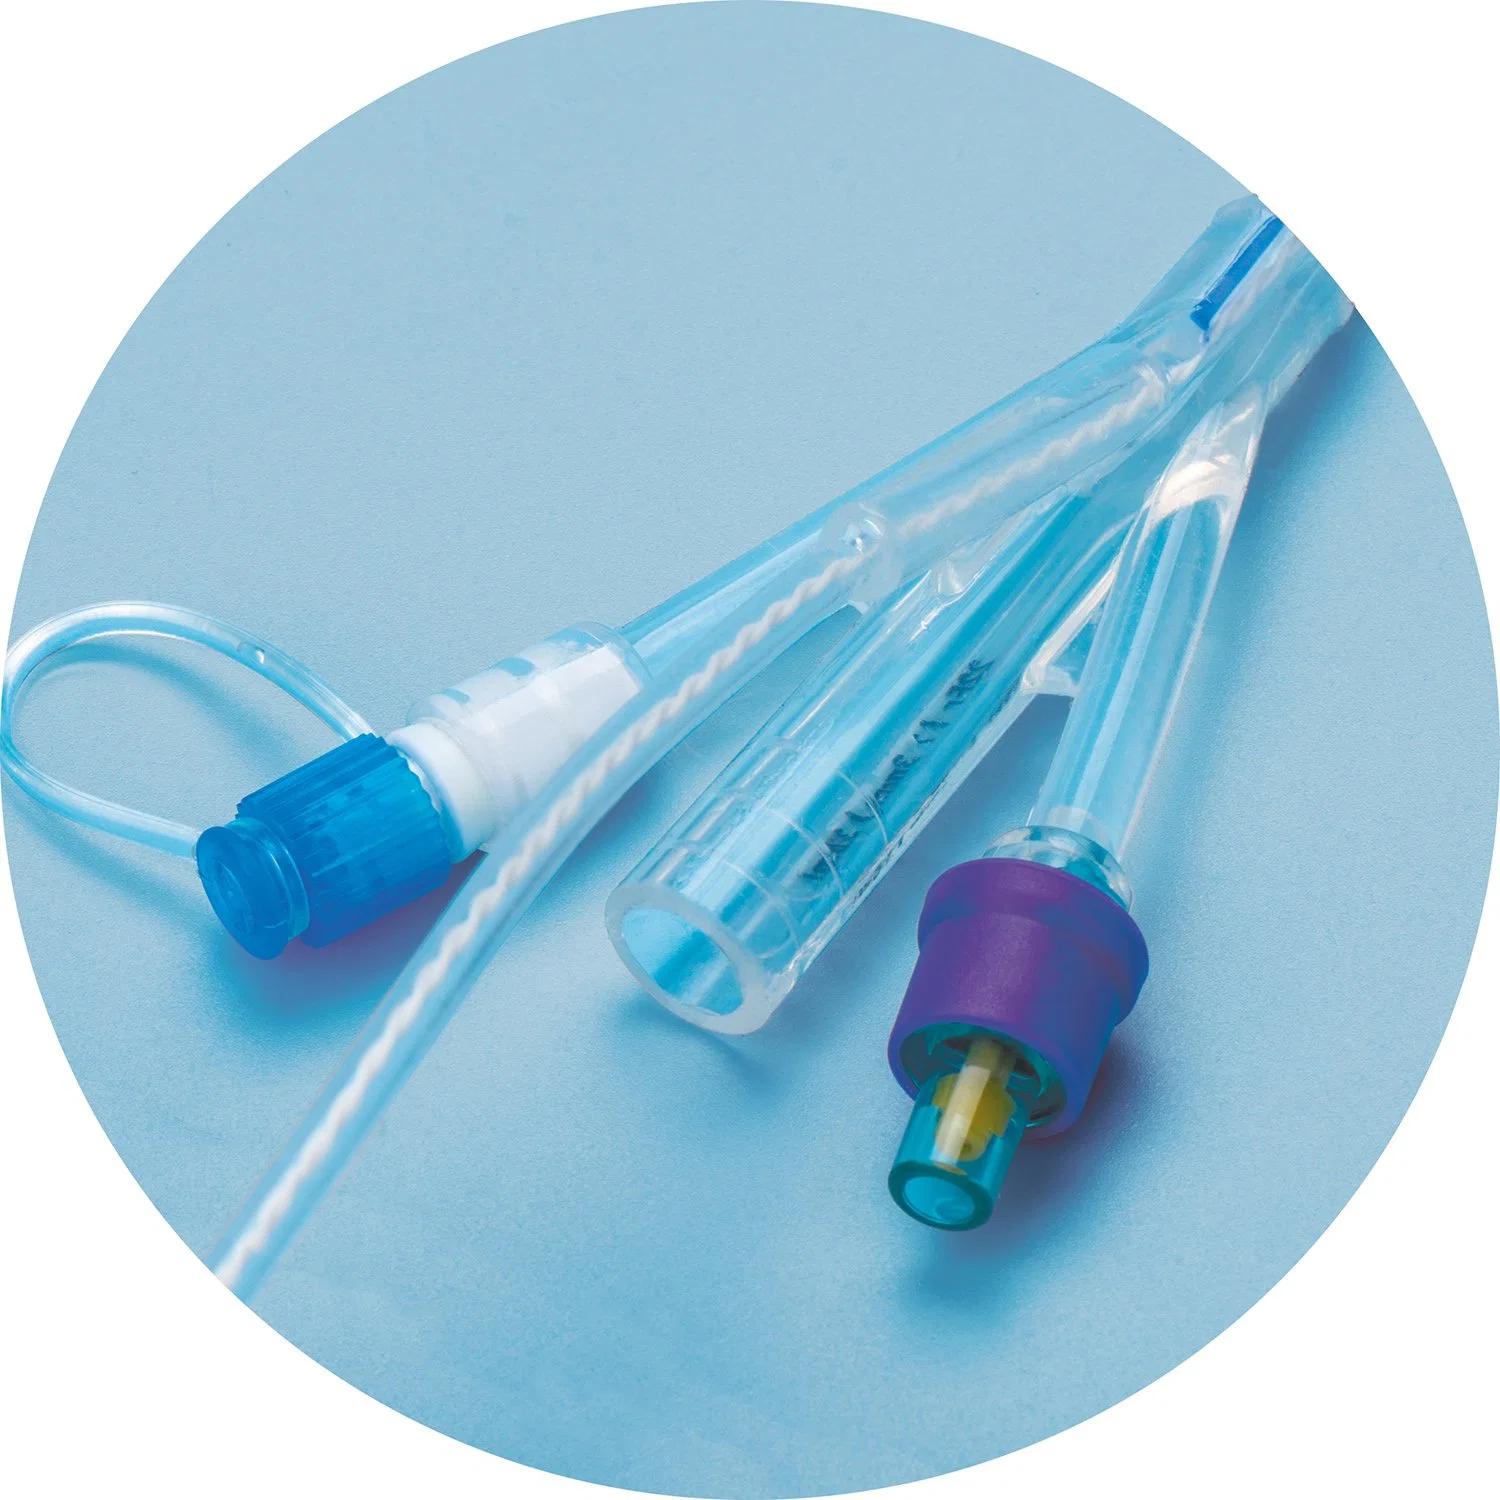 4 Way Silicone Foley Catheter with Temperature Probe (Sensor)